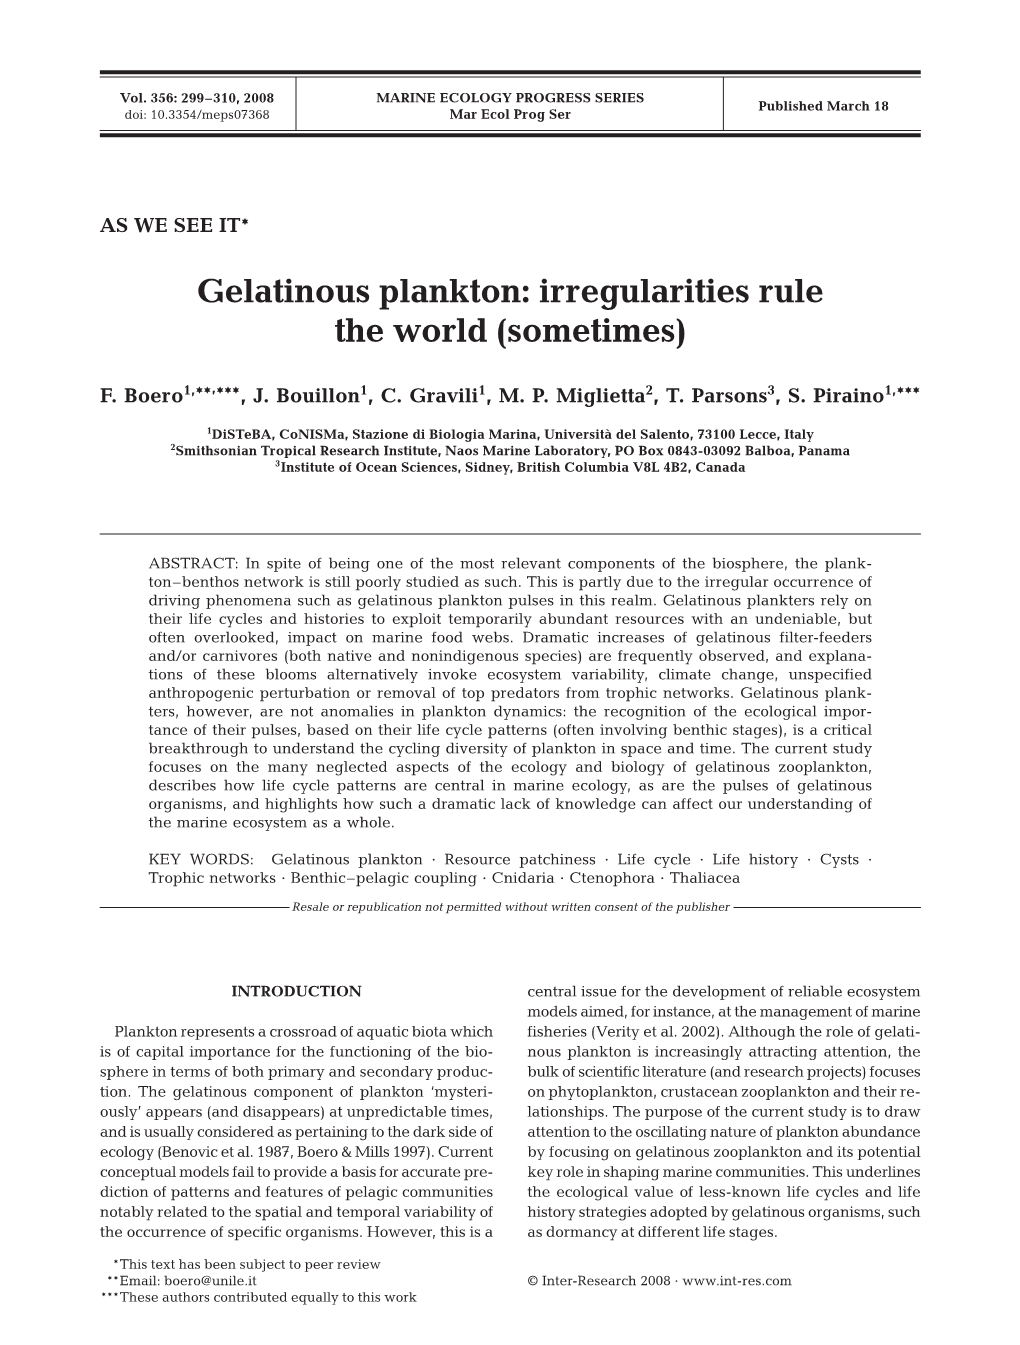 Gelatinous Plankton: Irregularities Rule the World (Sometimes)